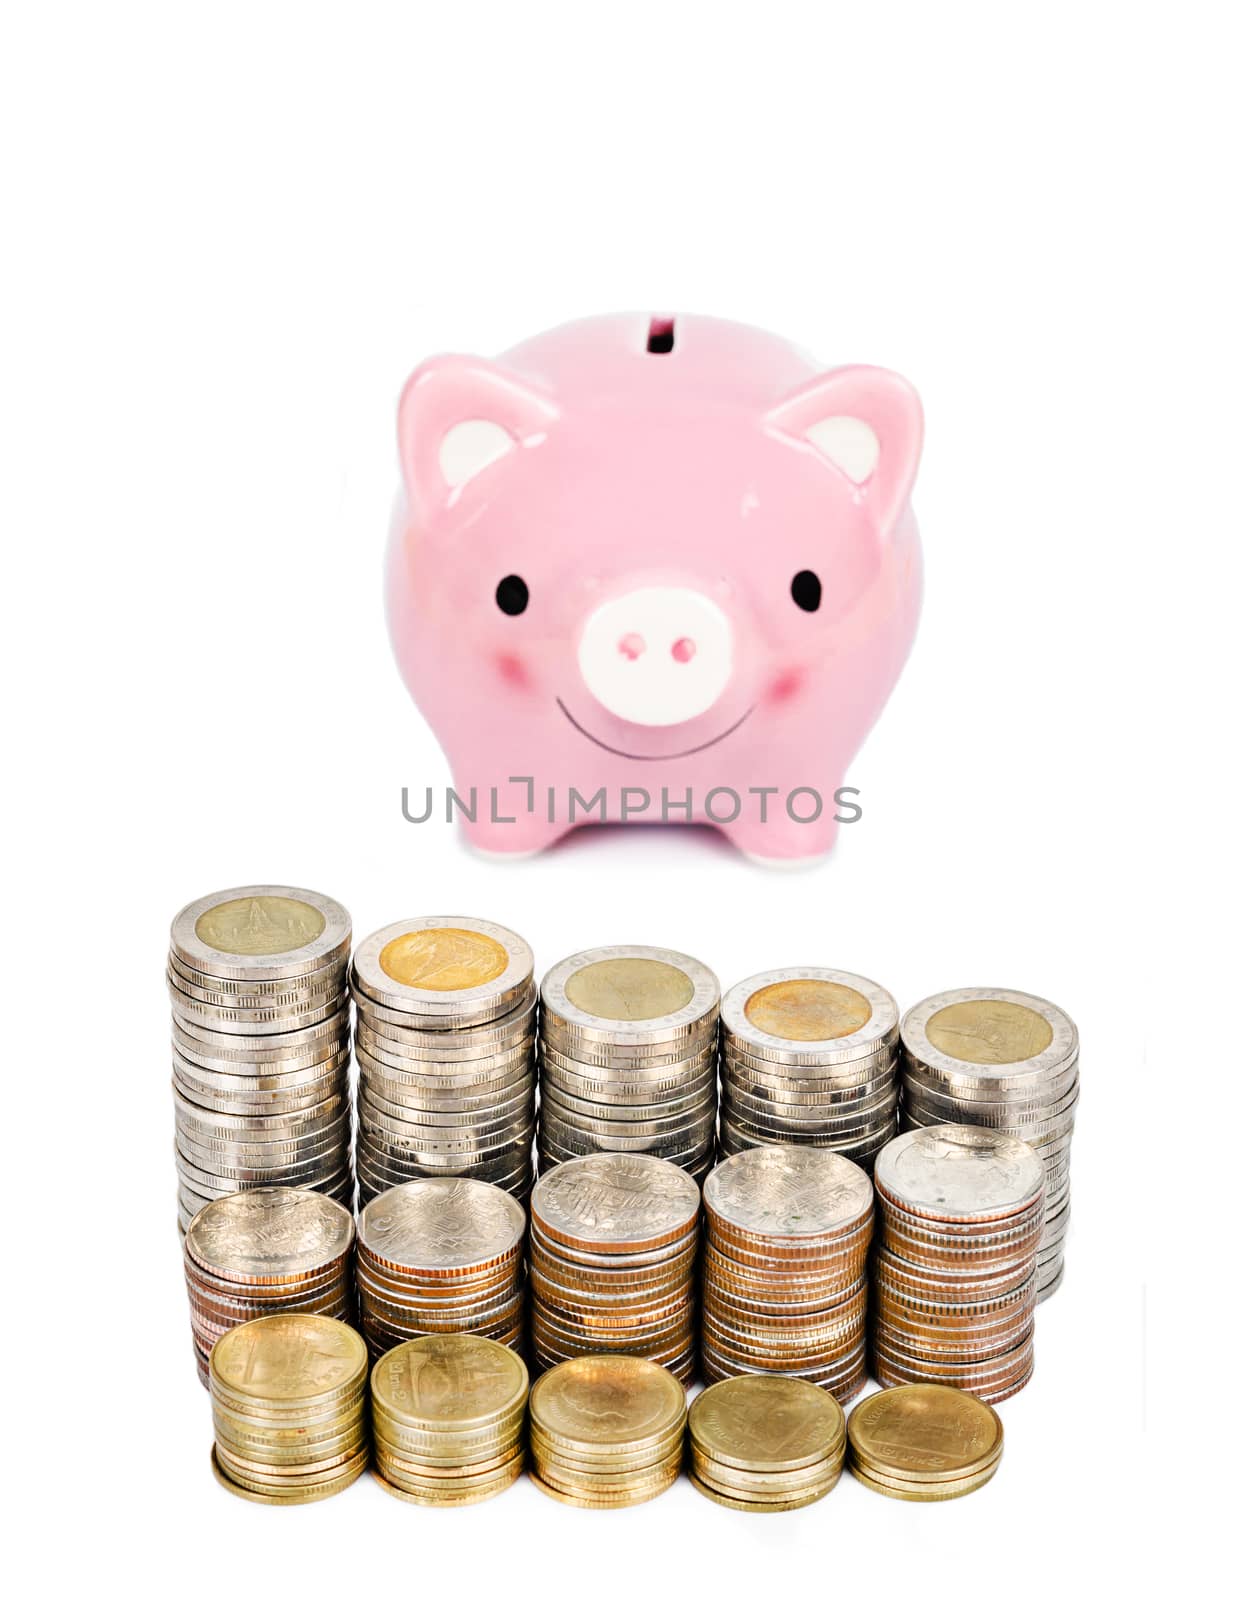 Money coins tower and pink piggybank. by Gamjai